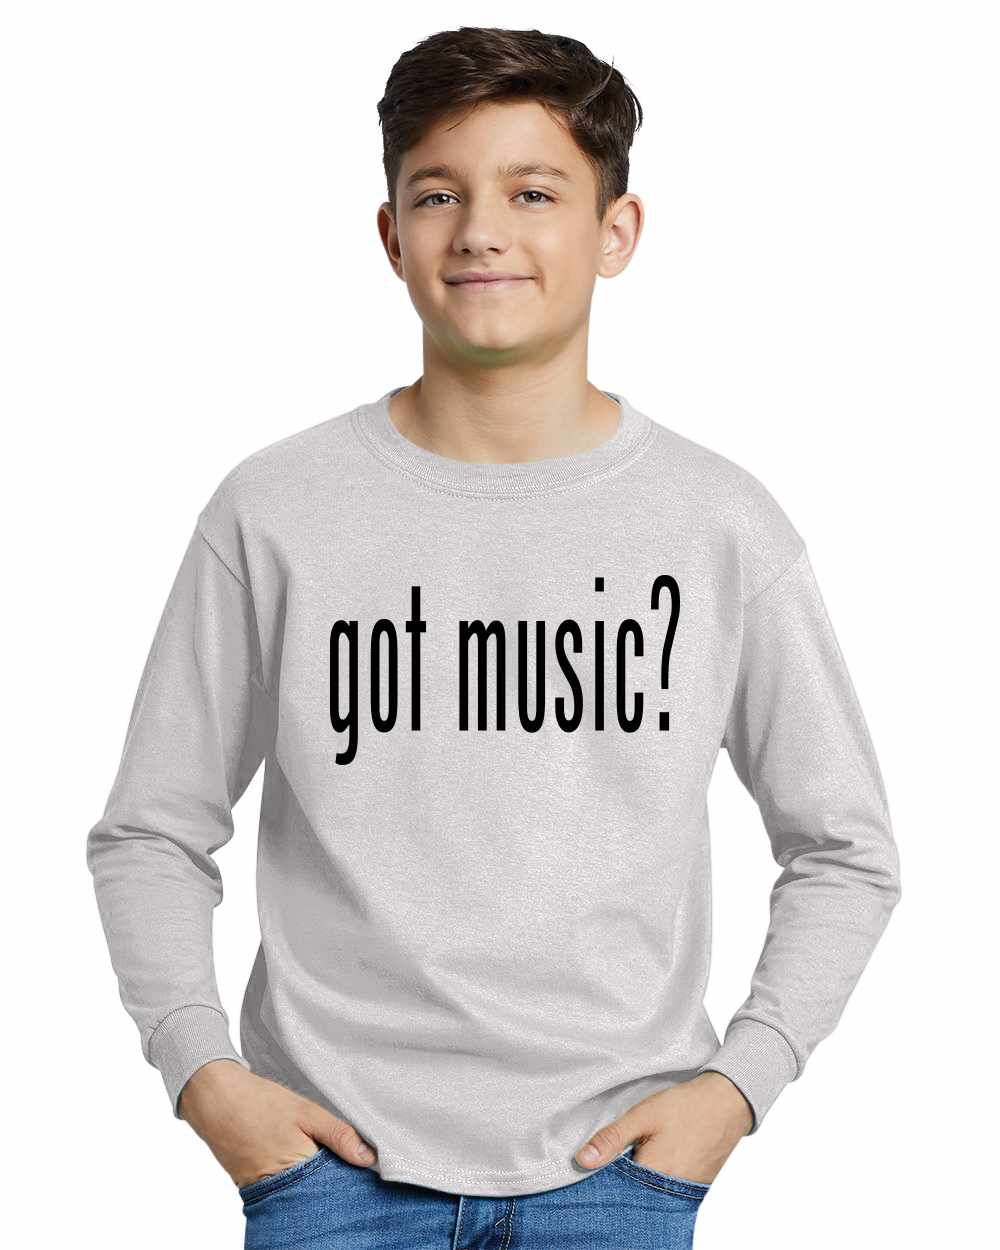 Got Music? on Youth Long Sleeve Shirt (#840-203)